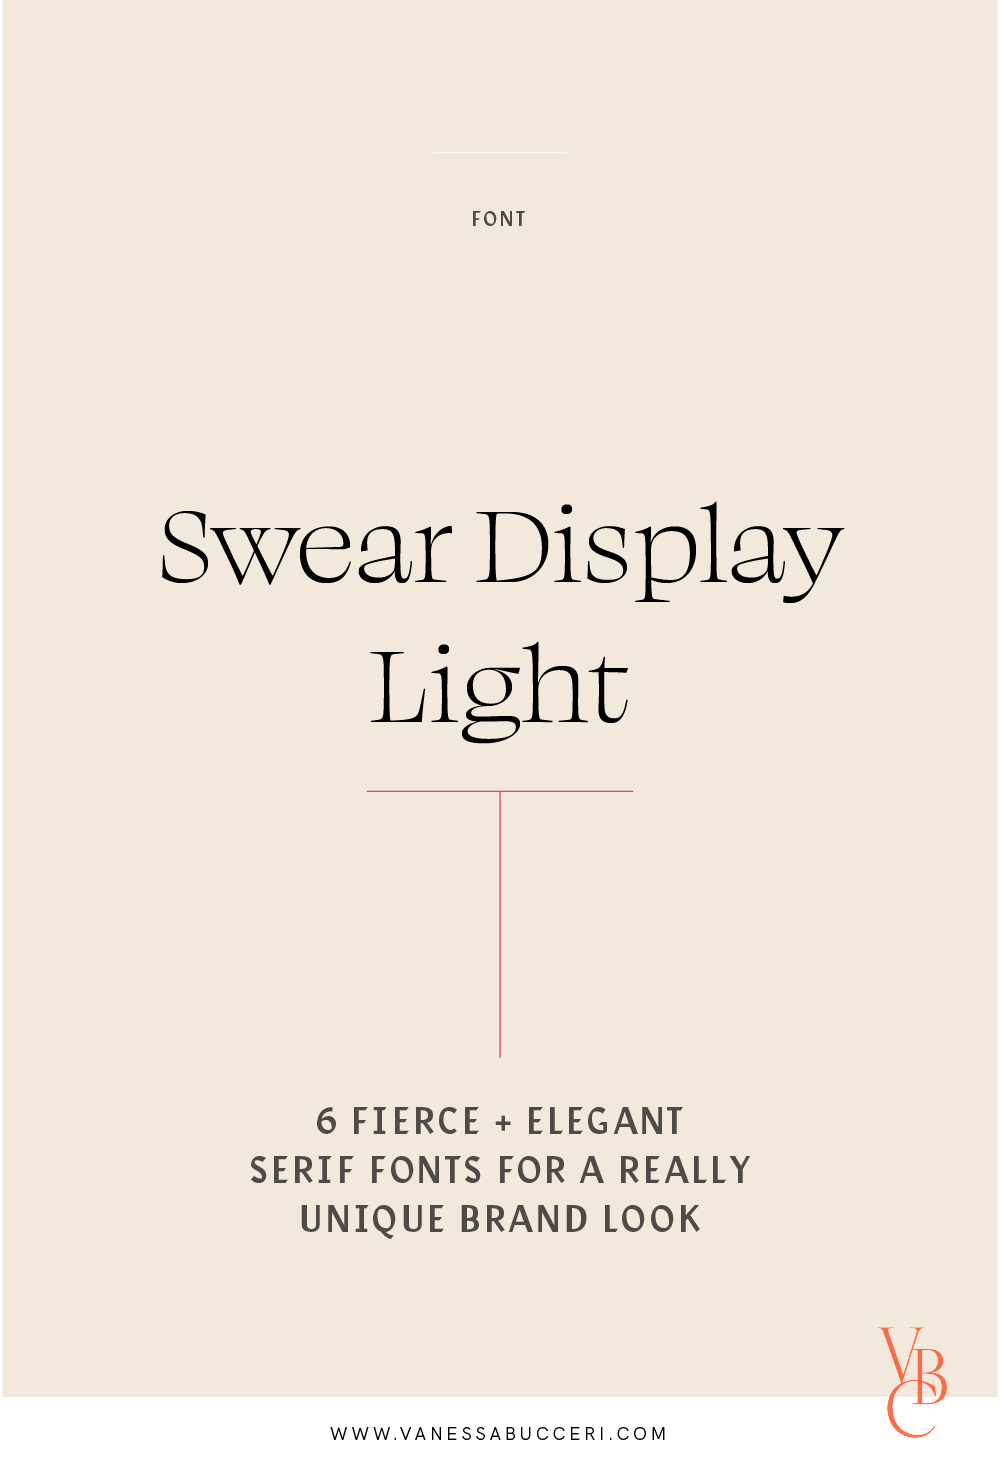 Elegant serif font Swear Display Light for a unique brand look